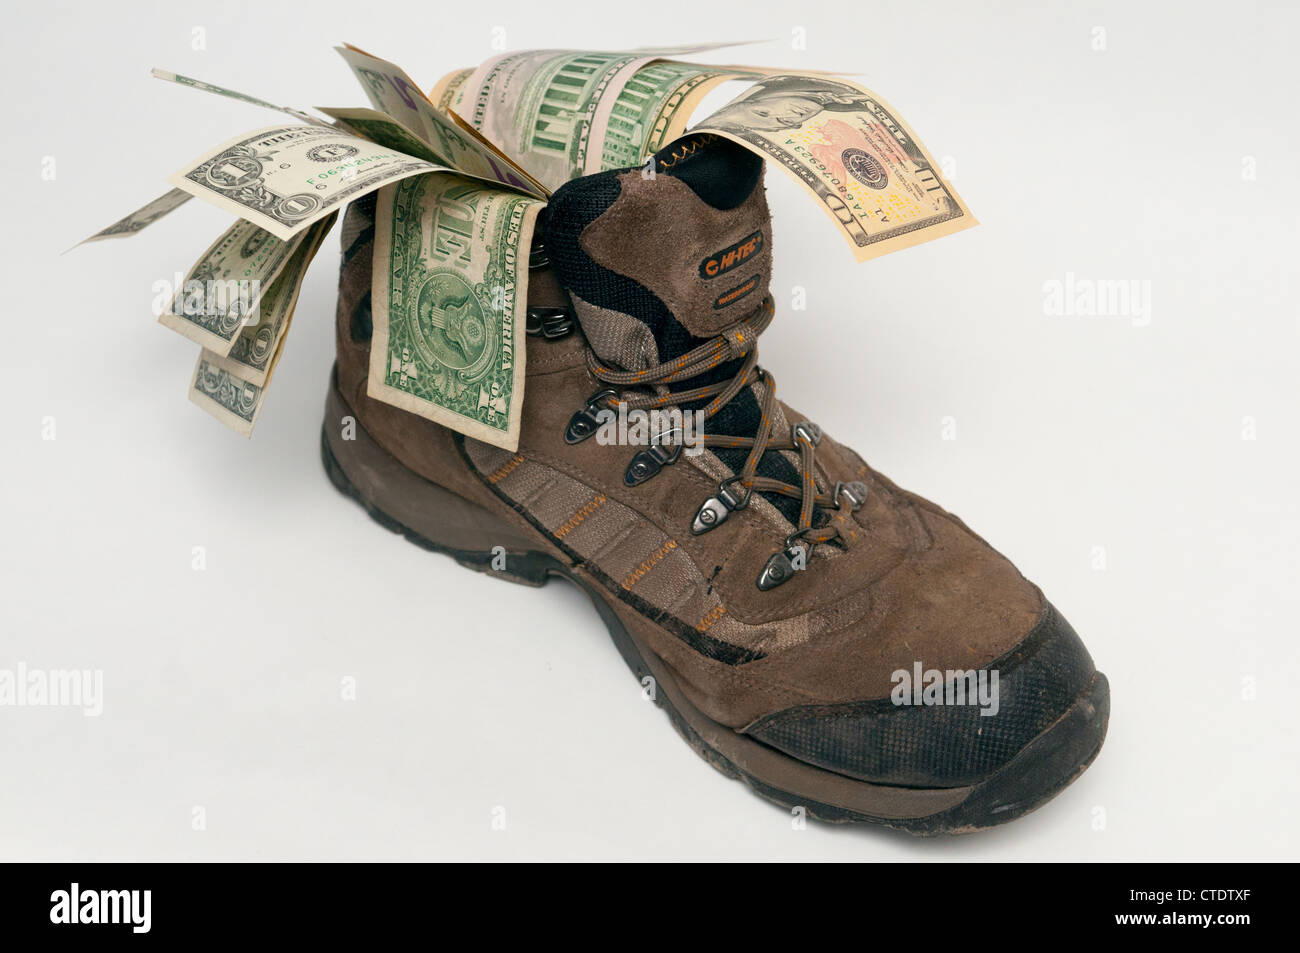 Walking boot full of travel money Stock Photo